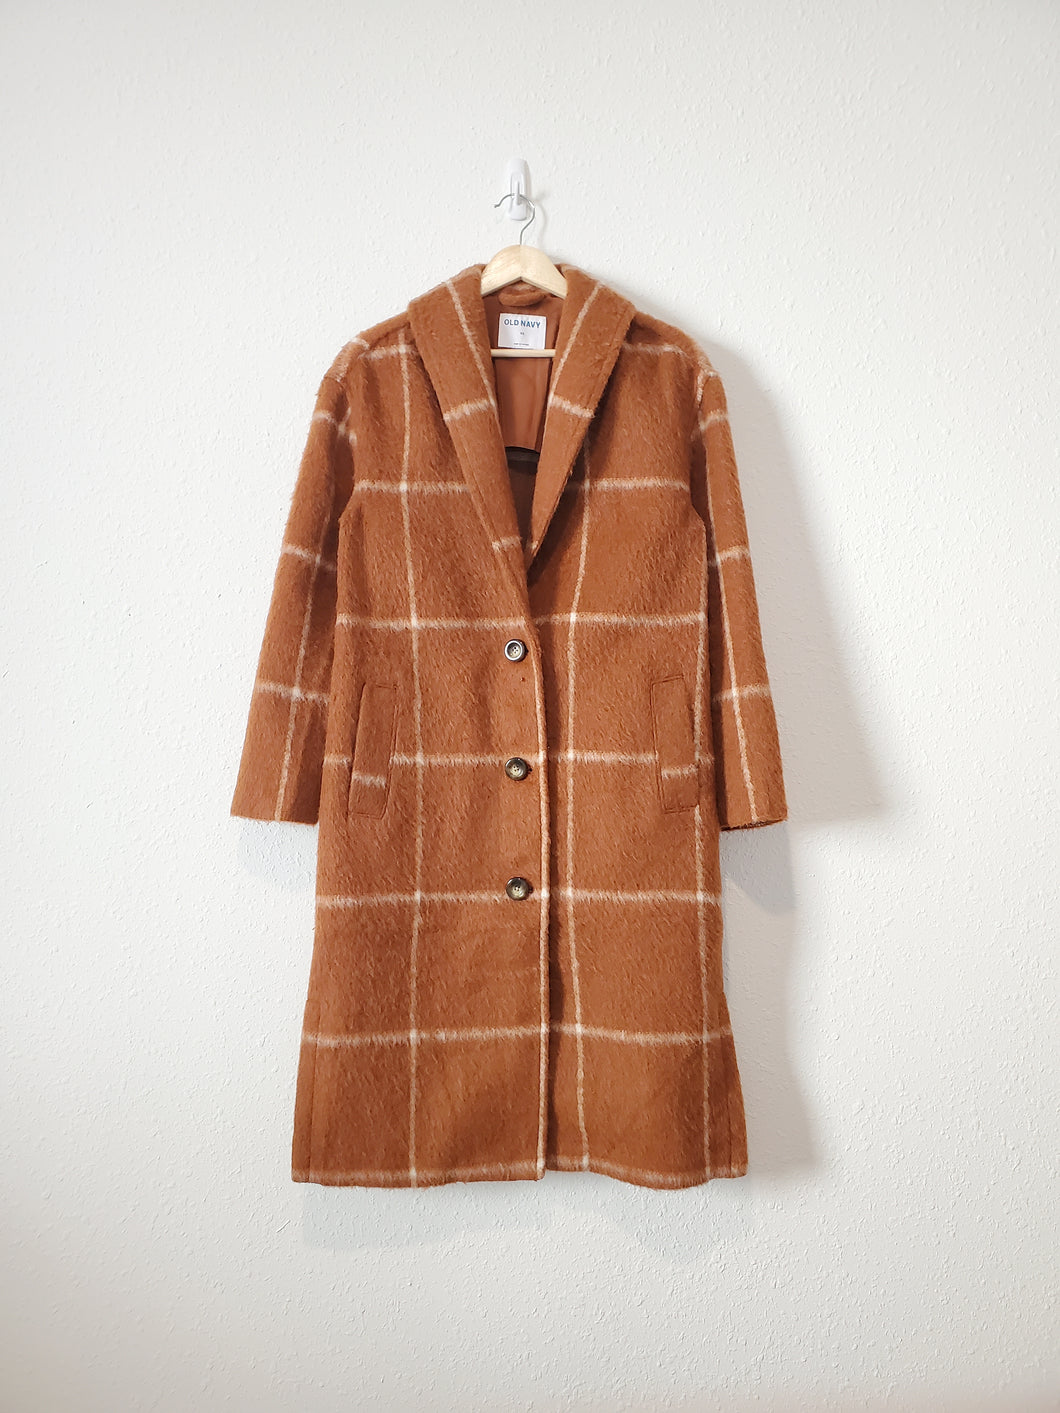 Rust Long Checkered Jacket (XS)